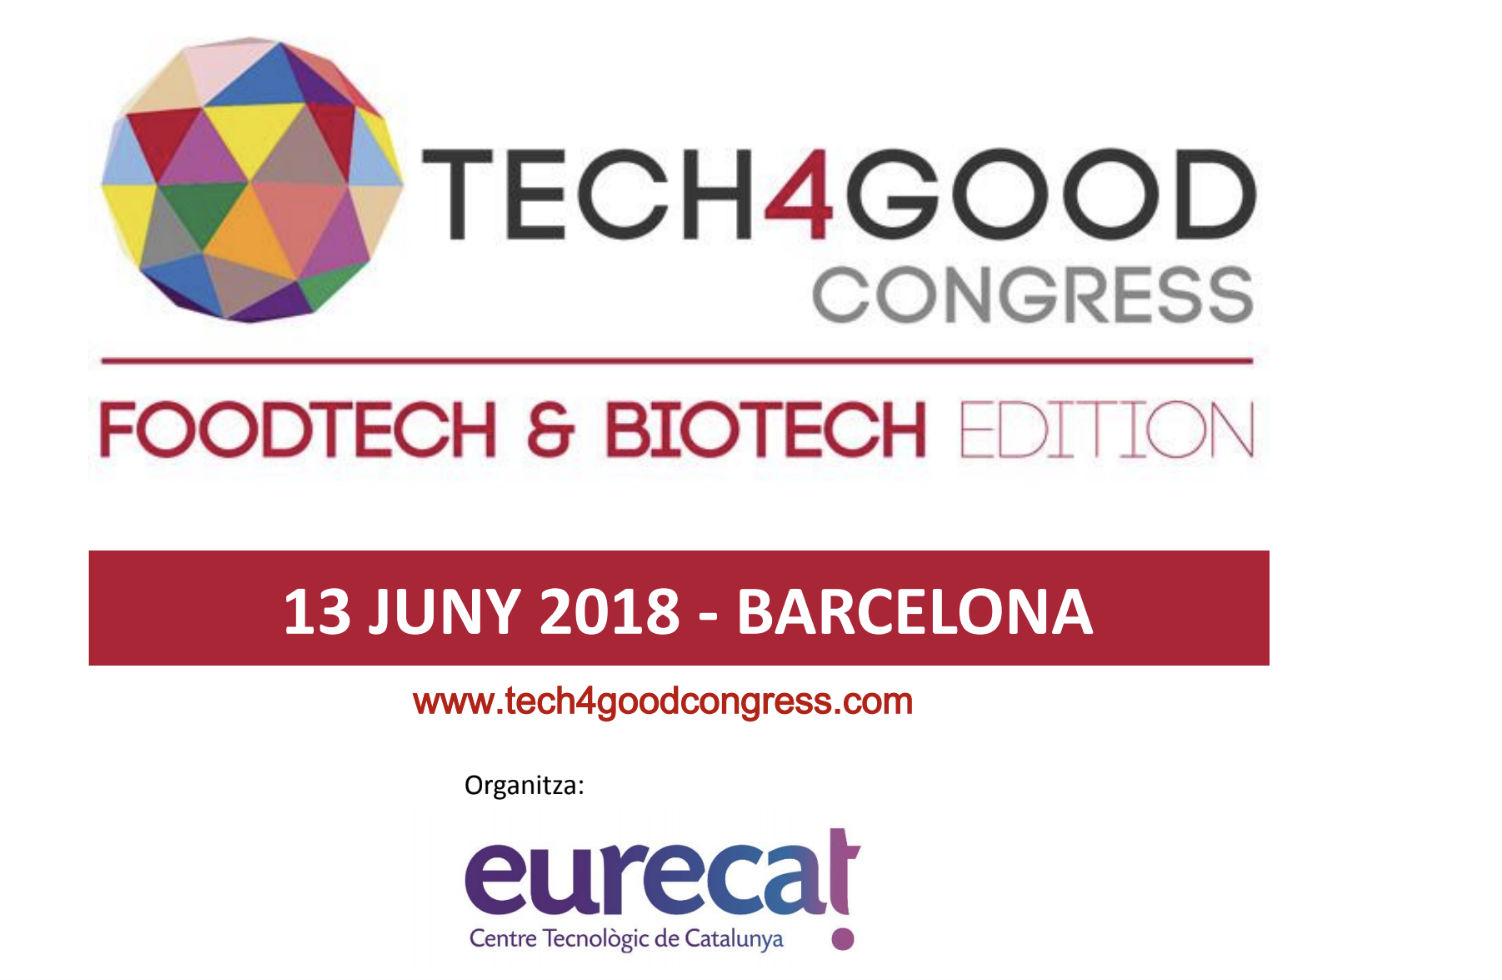 Congrés Tech4Good, Foodtech & Biotech edition, 13 de juny a Barcelona